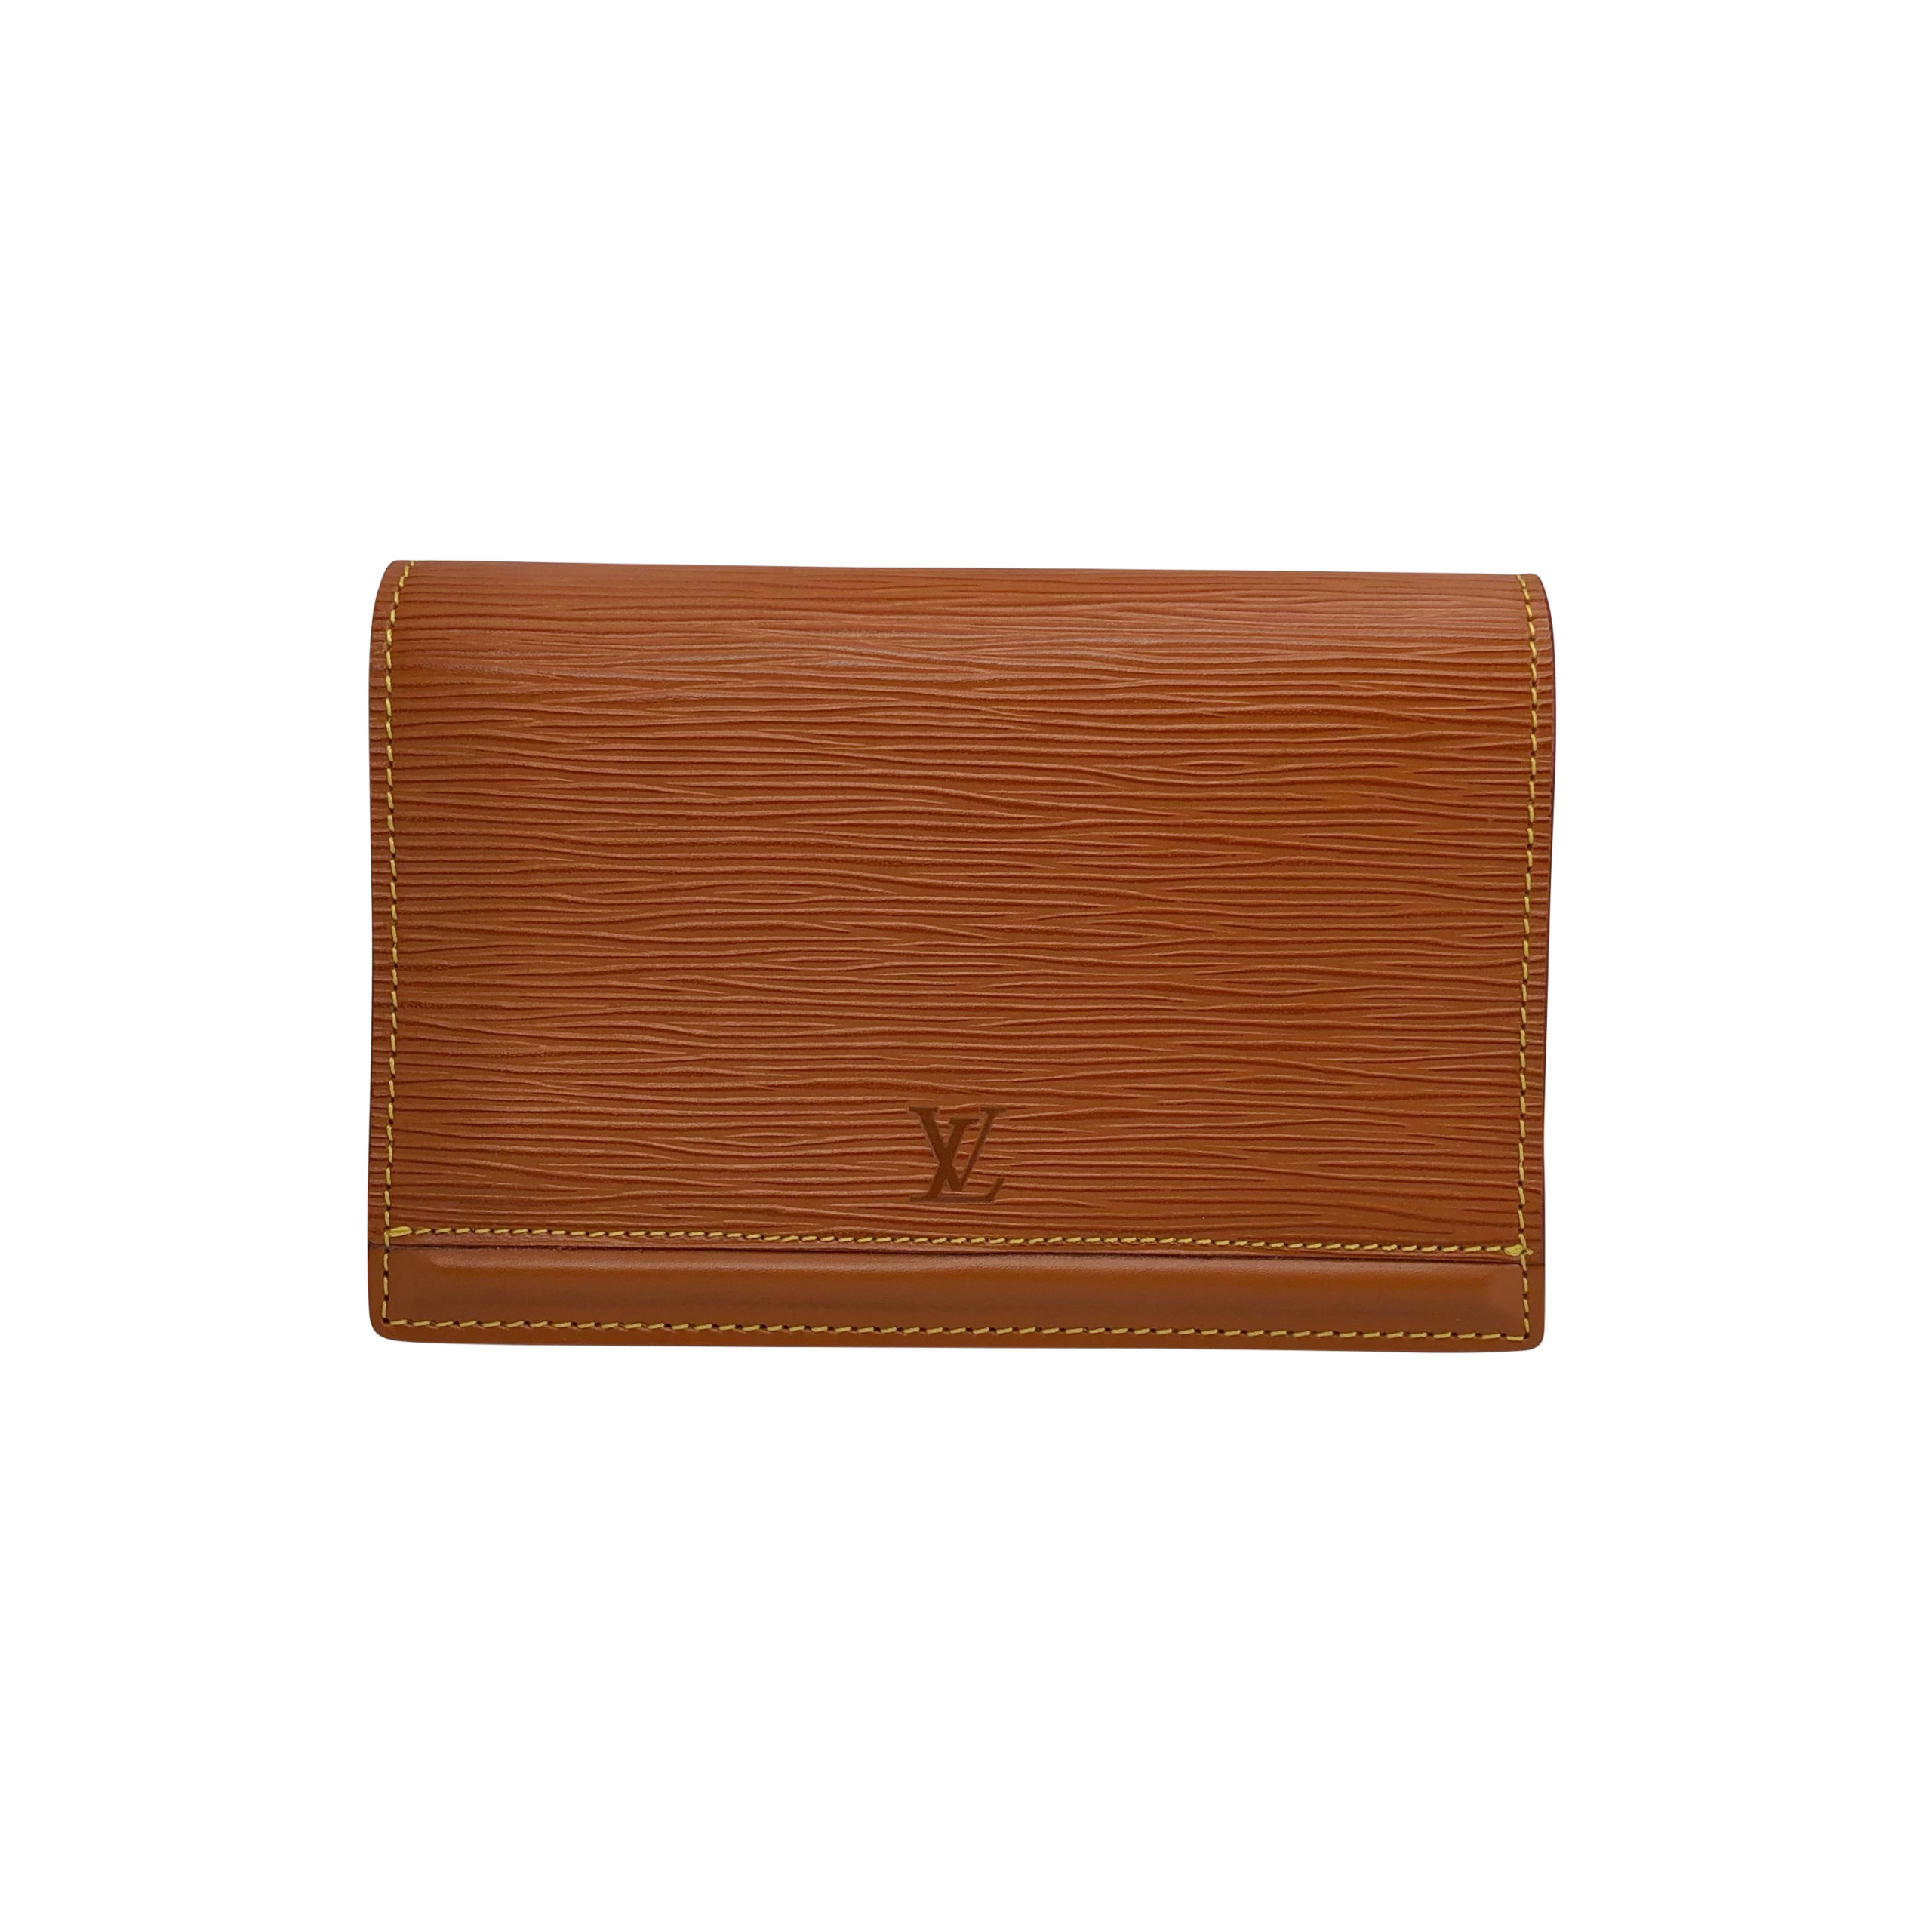 Louis Vuitton 90s vintage mini belt bag in orange epi leather